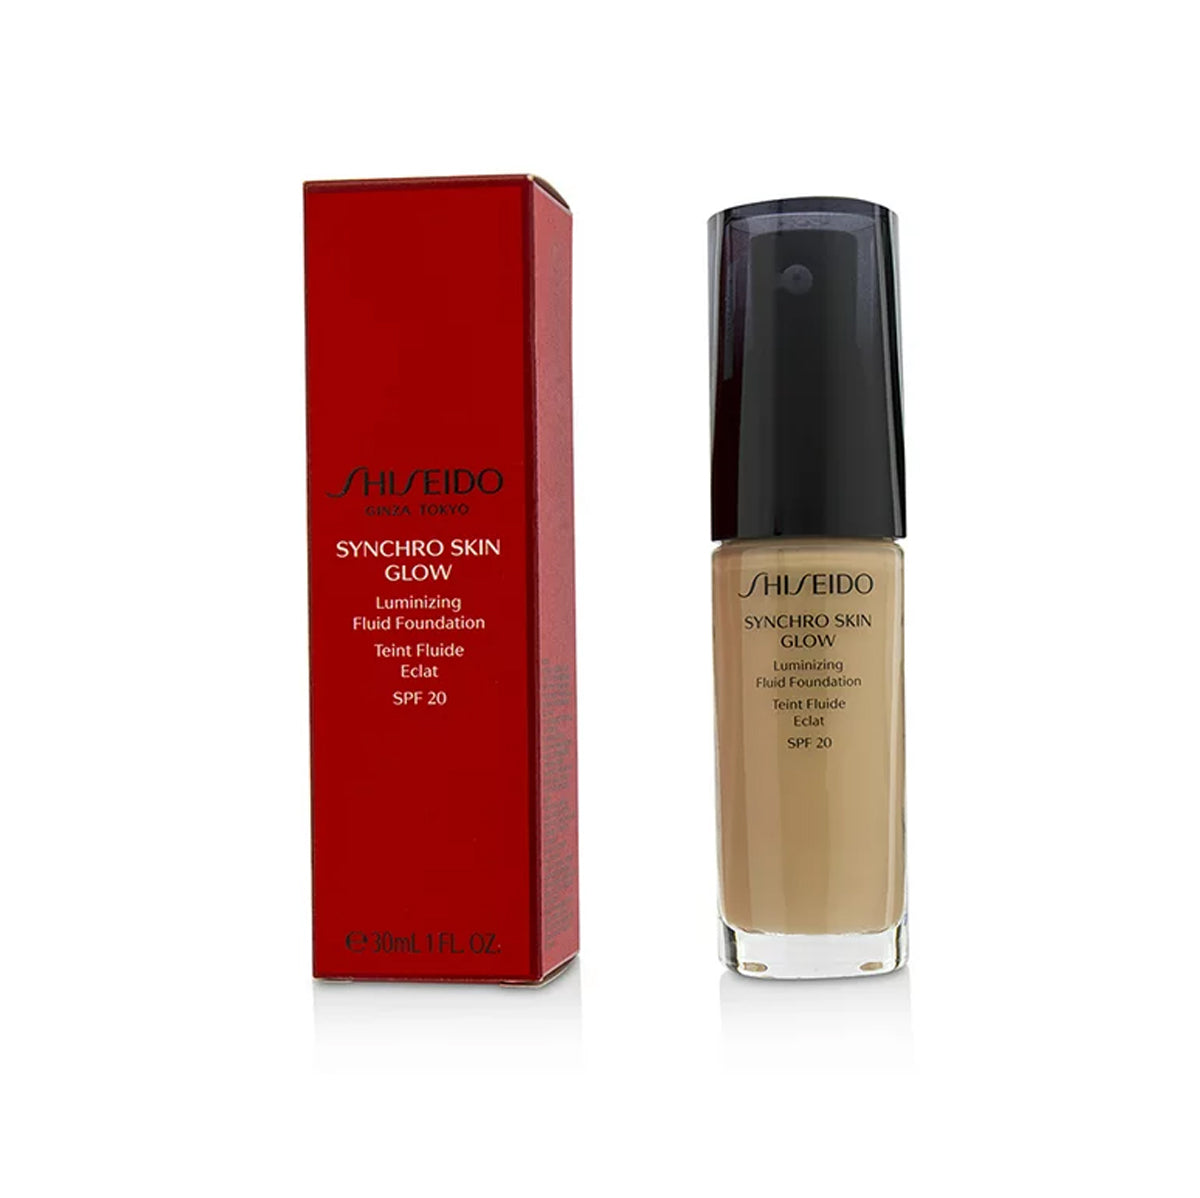 Shiseido Synchro Skin Glow Luminizing Fluid Foundation SPF 20 Rose 2 -  30 ml / 1 oz